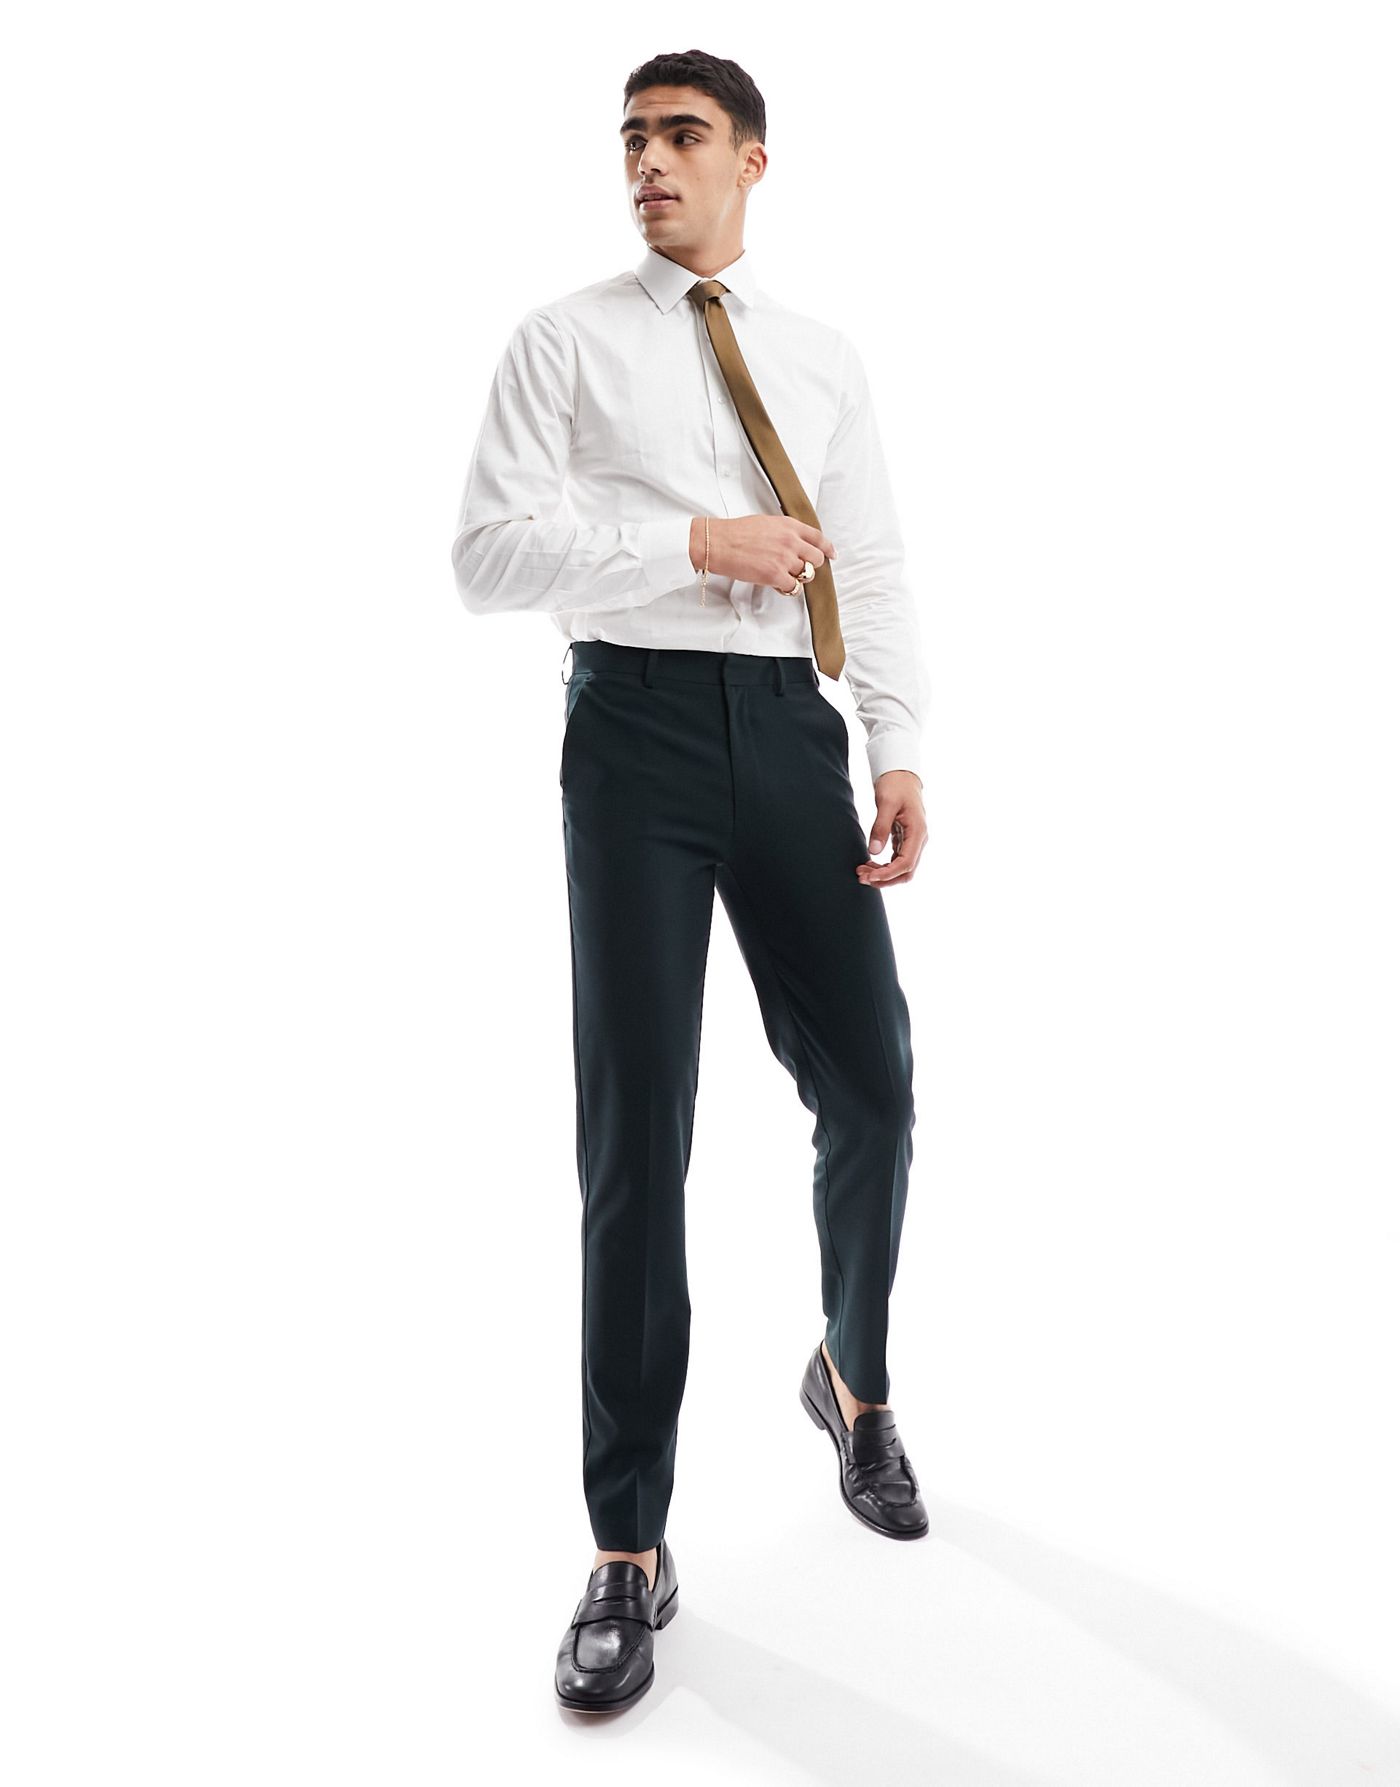 ASOS DESIGN slim suit trouser in dark green